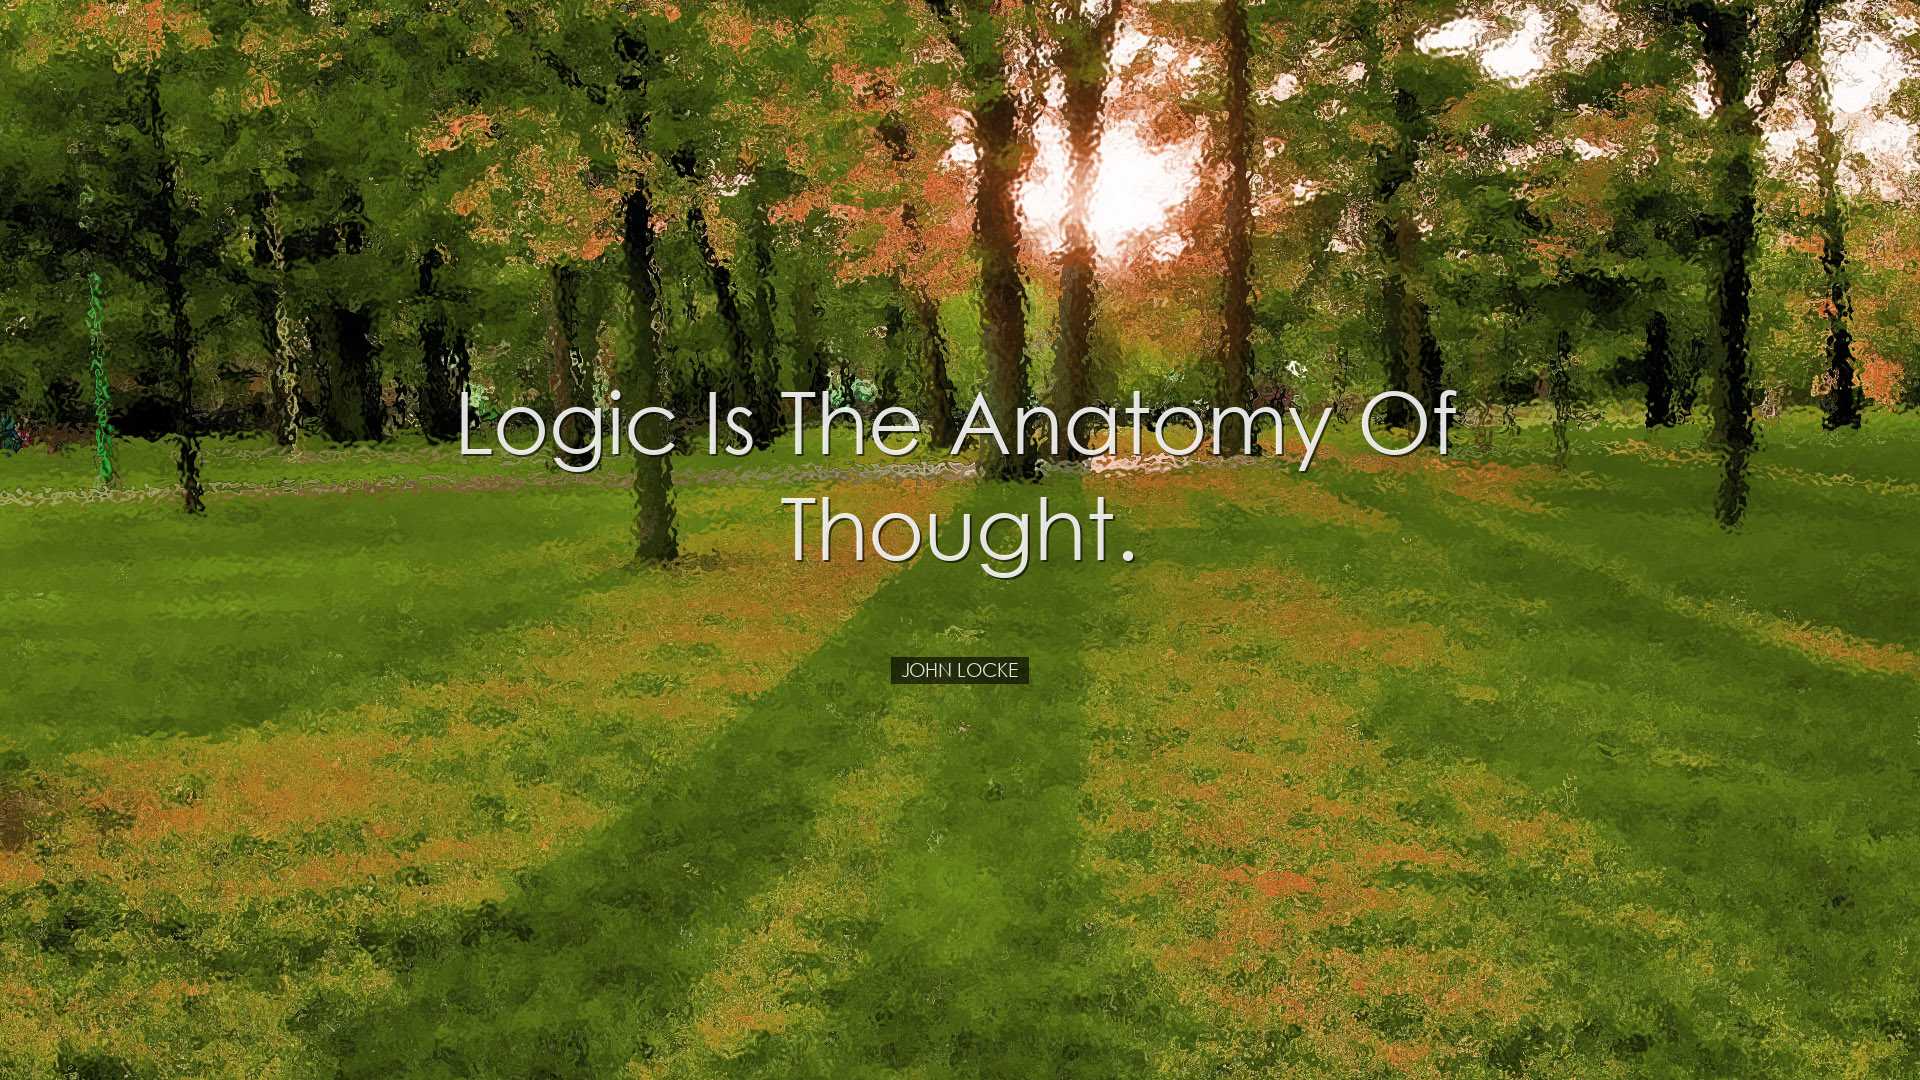 Logic is the anatomy of thought. - John Locke